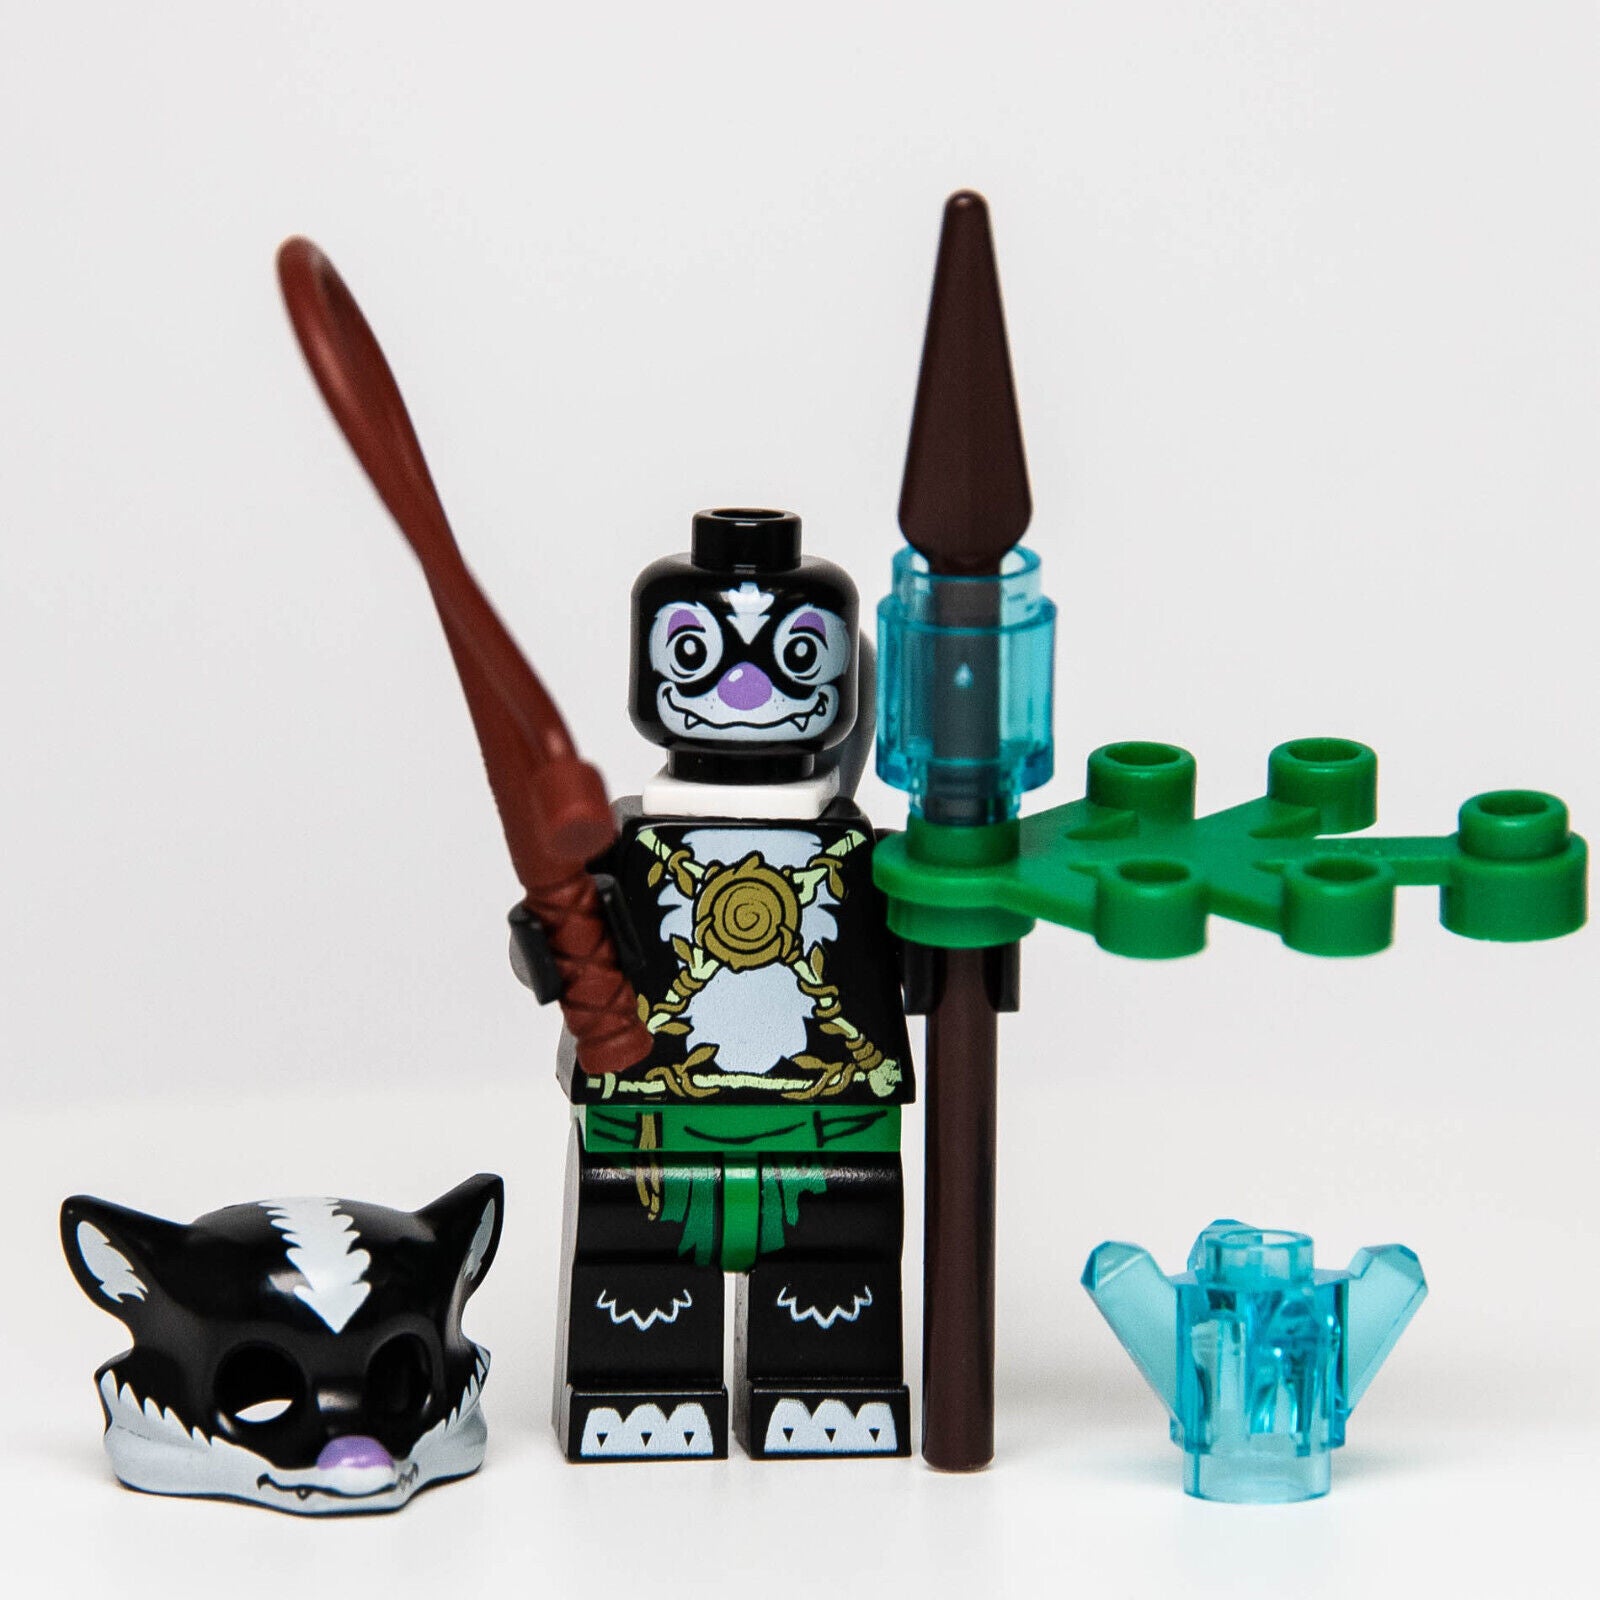 LEGO Chima Minifigure Skinnet from 70107 Skunk Attack (loc029)